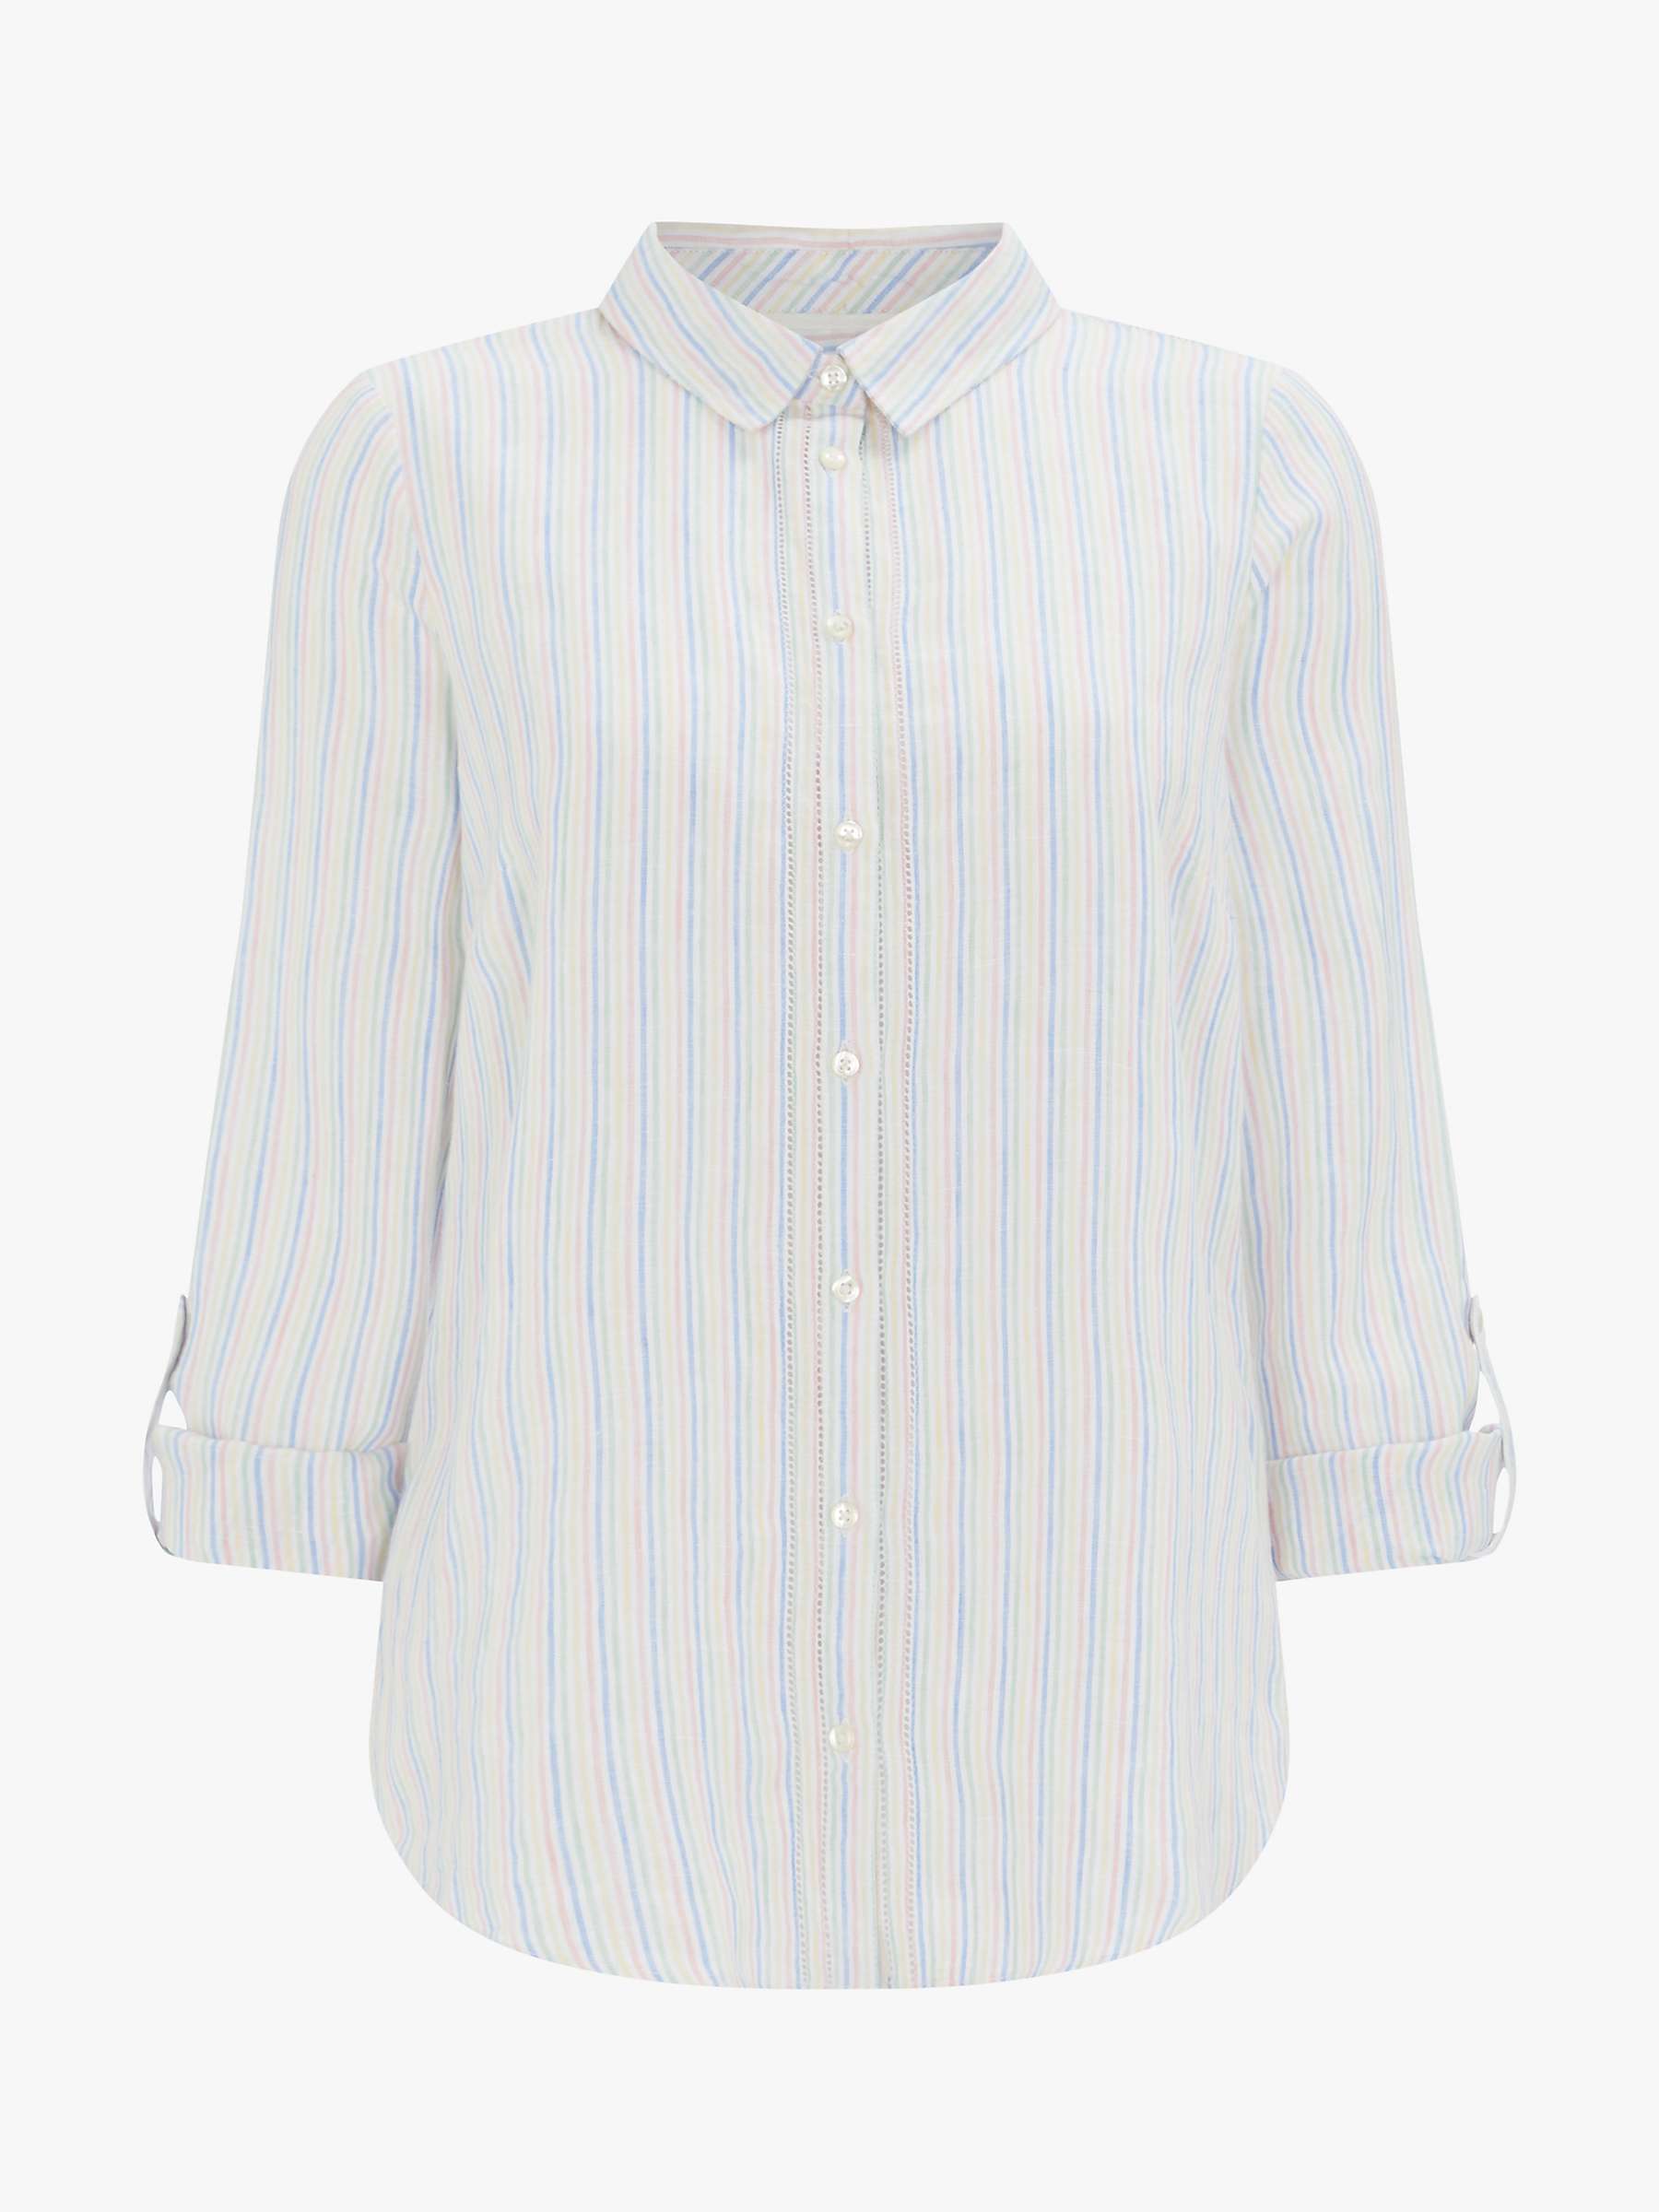 Buy Crew Clothing Striped Linen Shirt, White/Multi Online at johnlewis.com